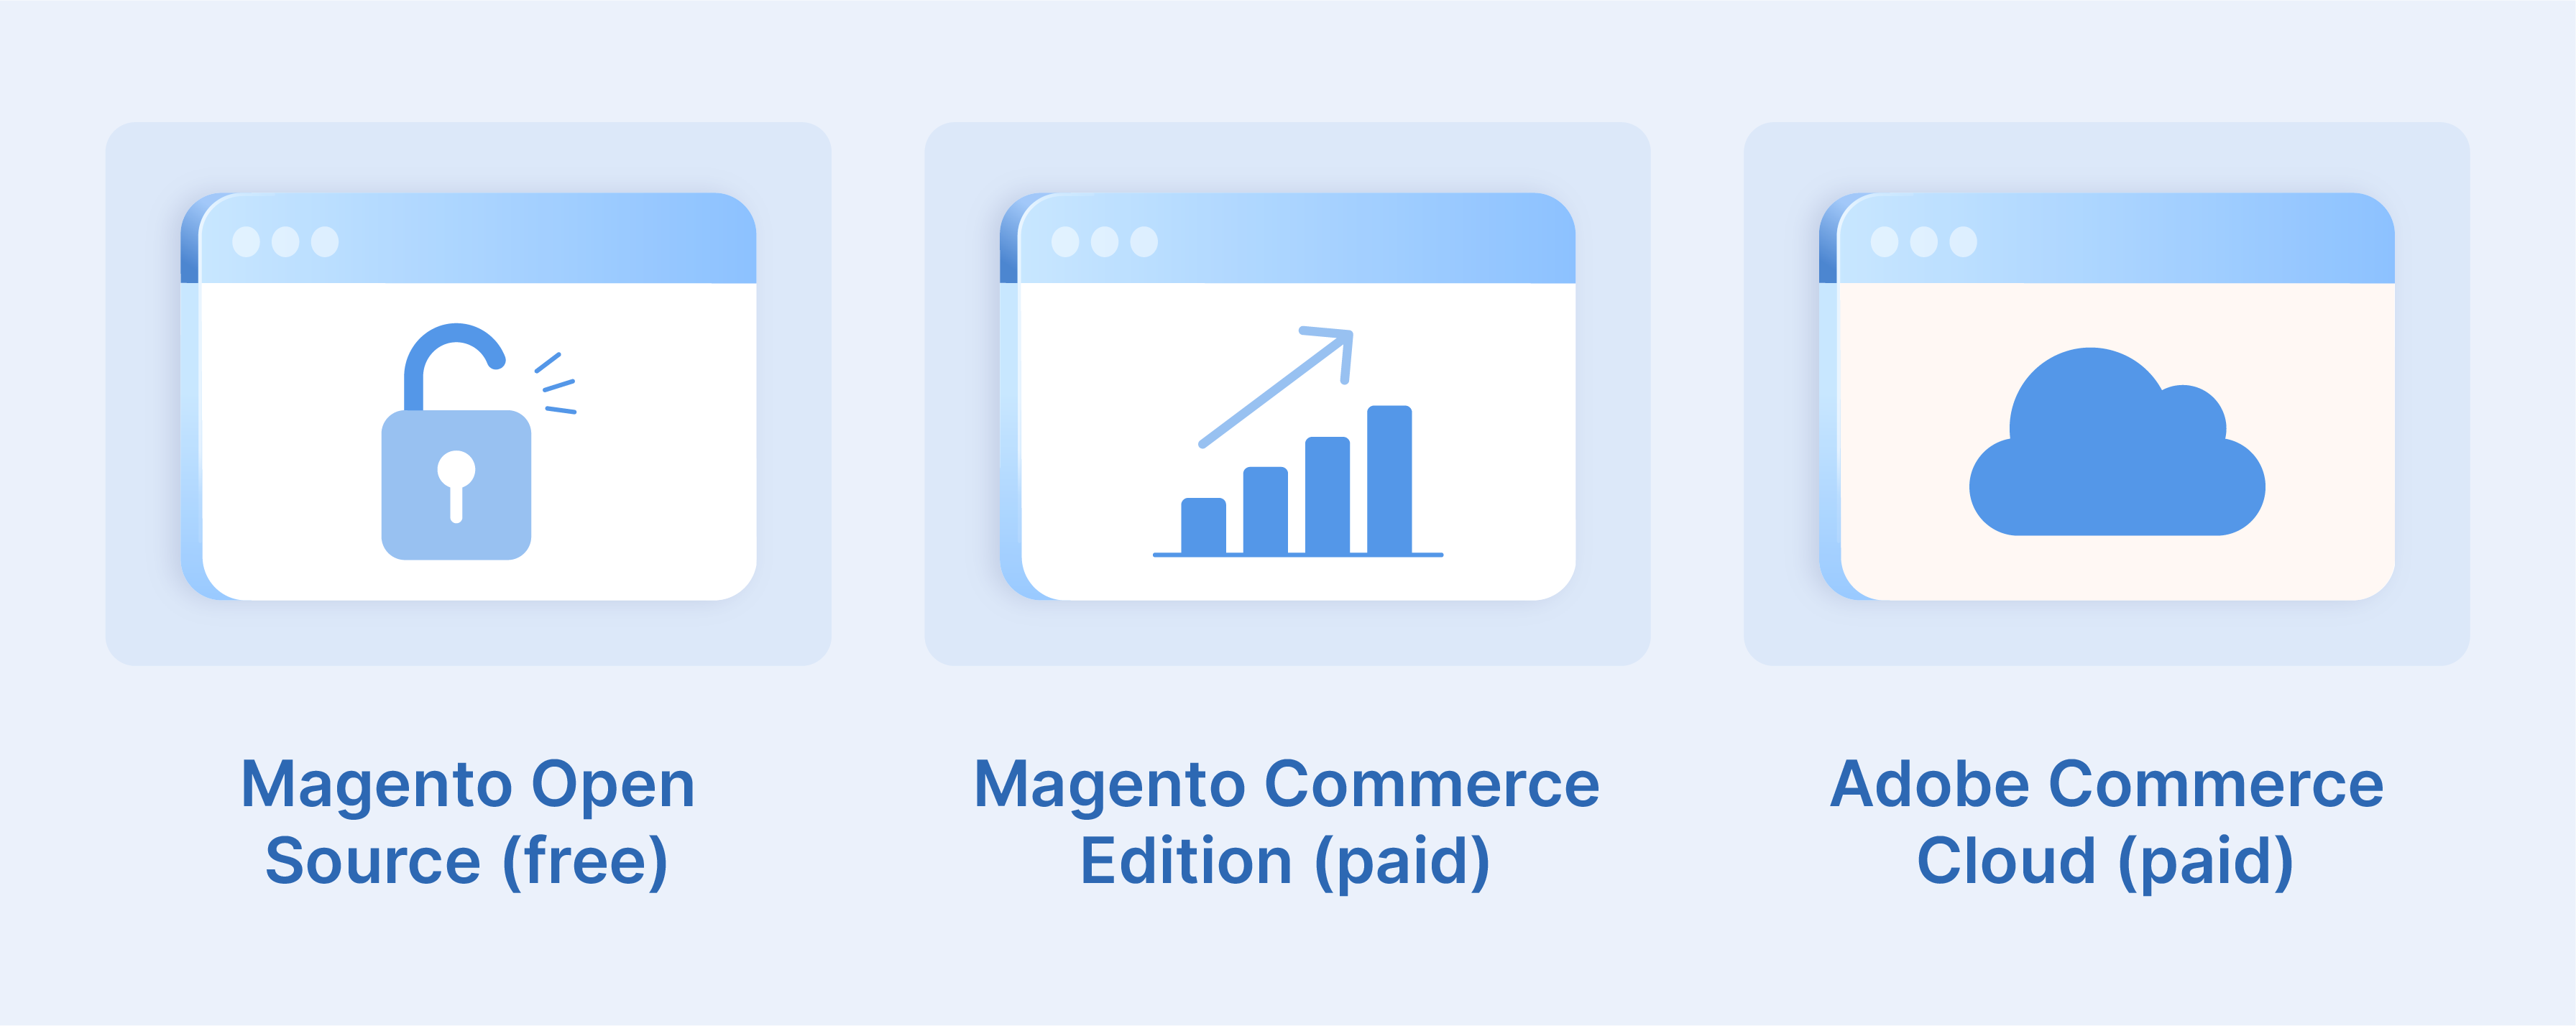 Comparison of Magento Editions: Open Source, Commerce, Commerce Cloud